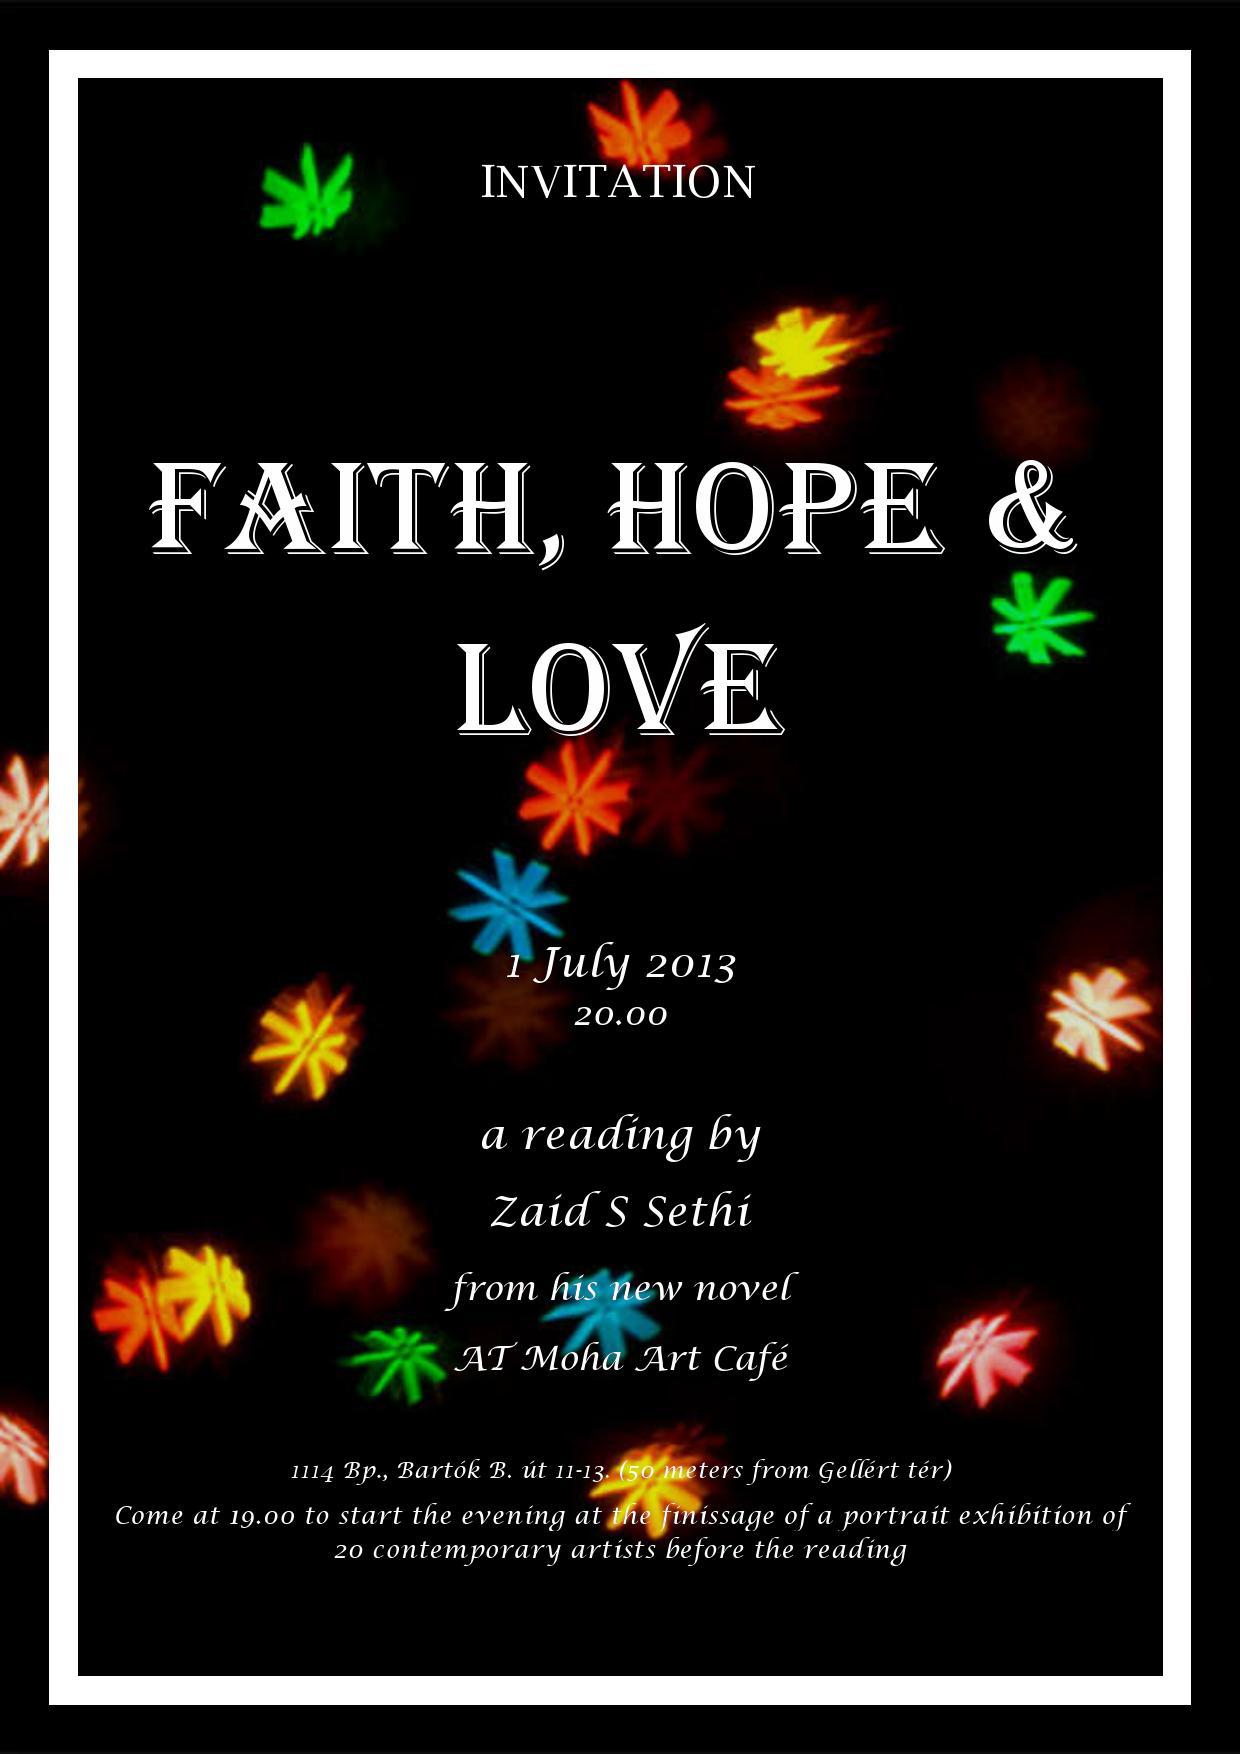 Invitation: 'Faith, Hope & Love' Book Reading, Moha Café Budapest, 1 July